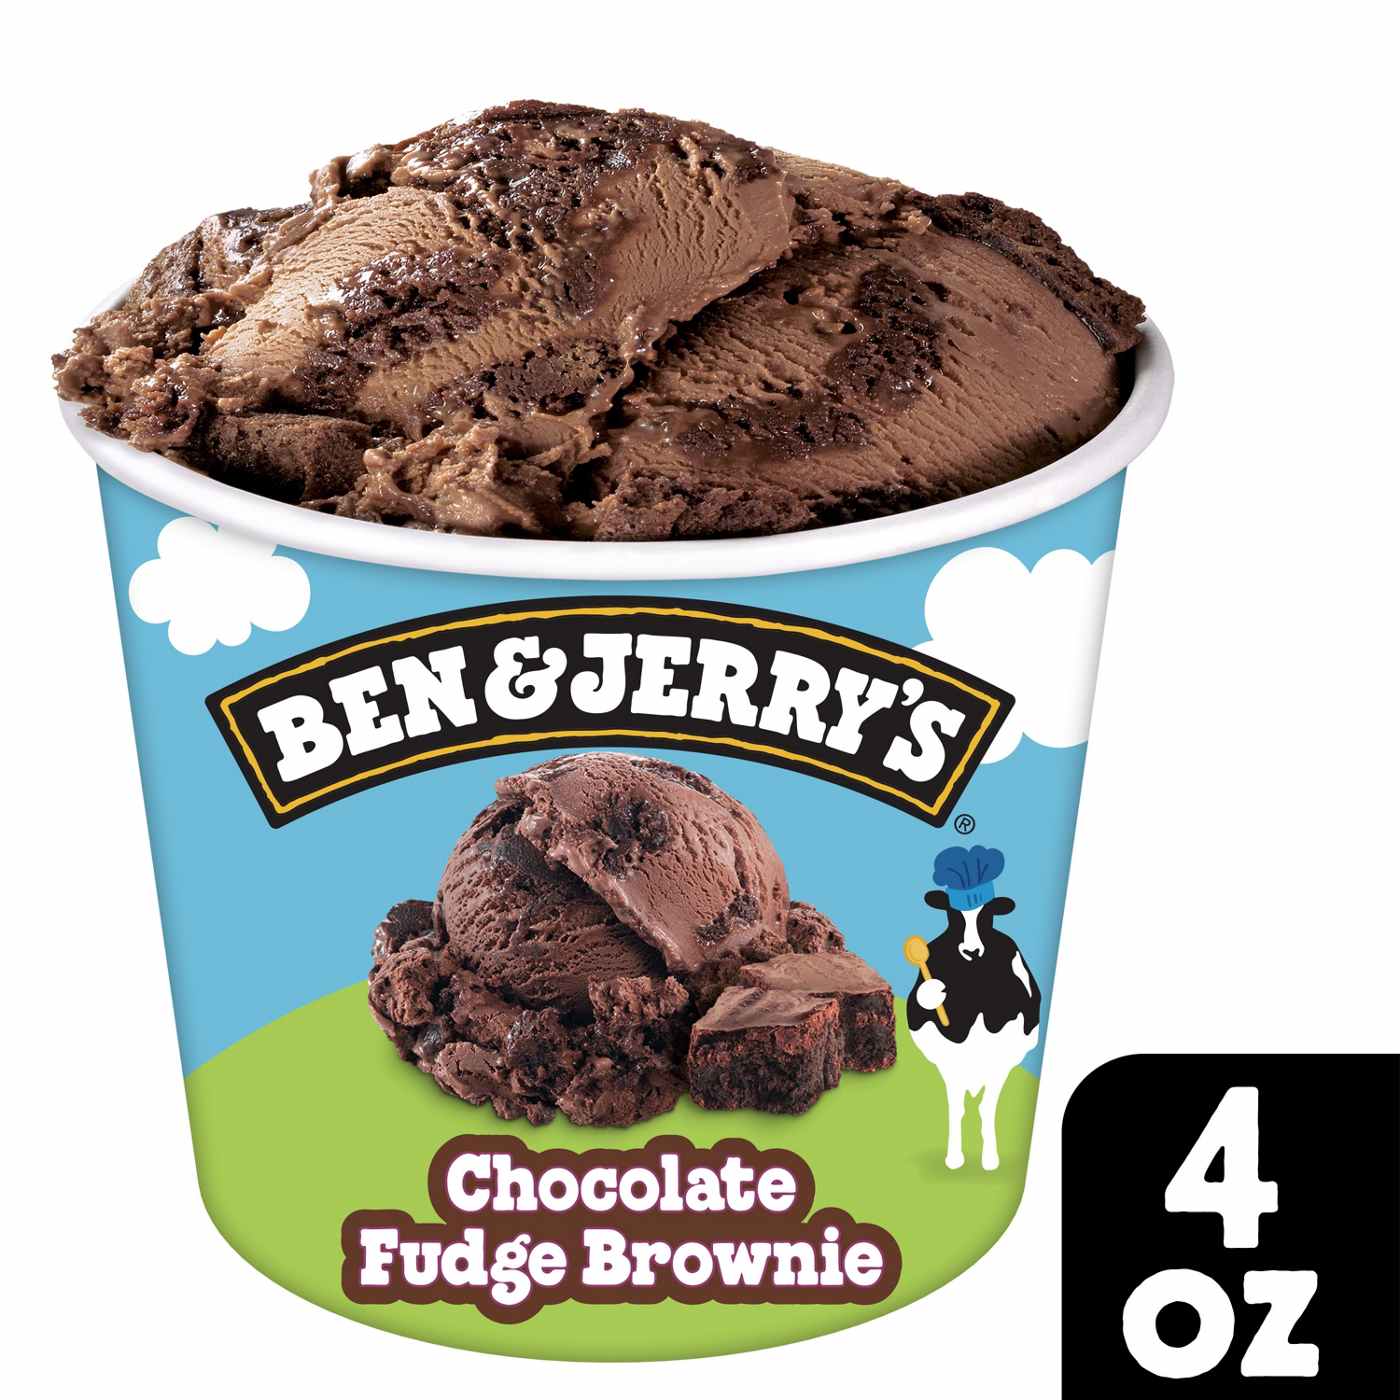 Ben & Jerry's Chocolate Fudge Brownie Ice Cream; image 3 of 7